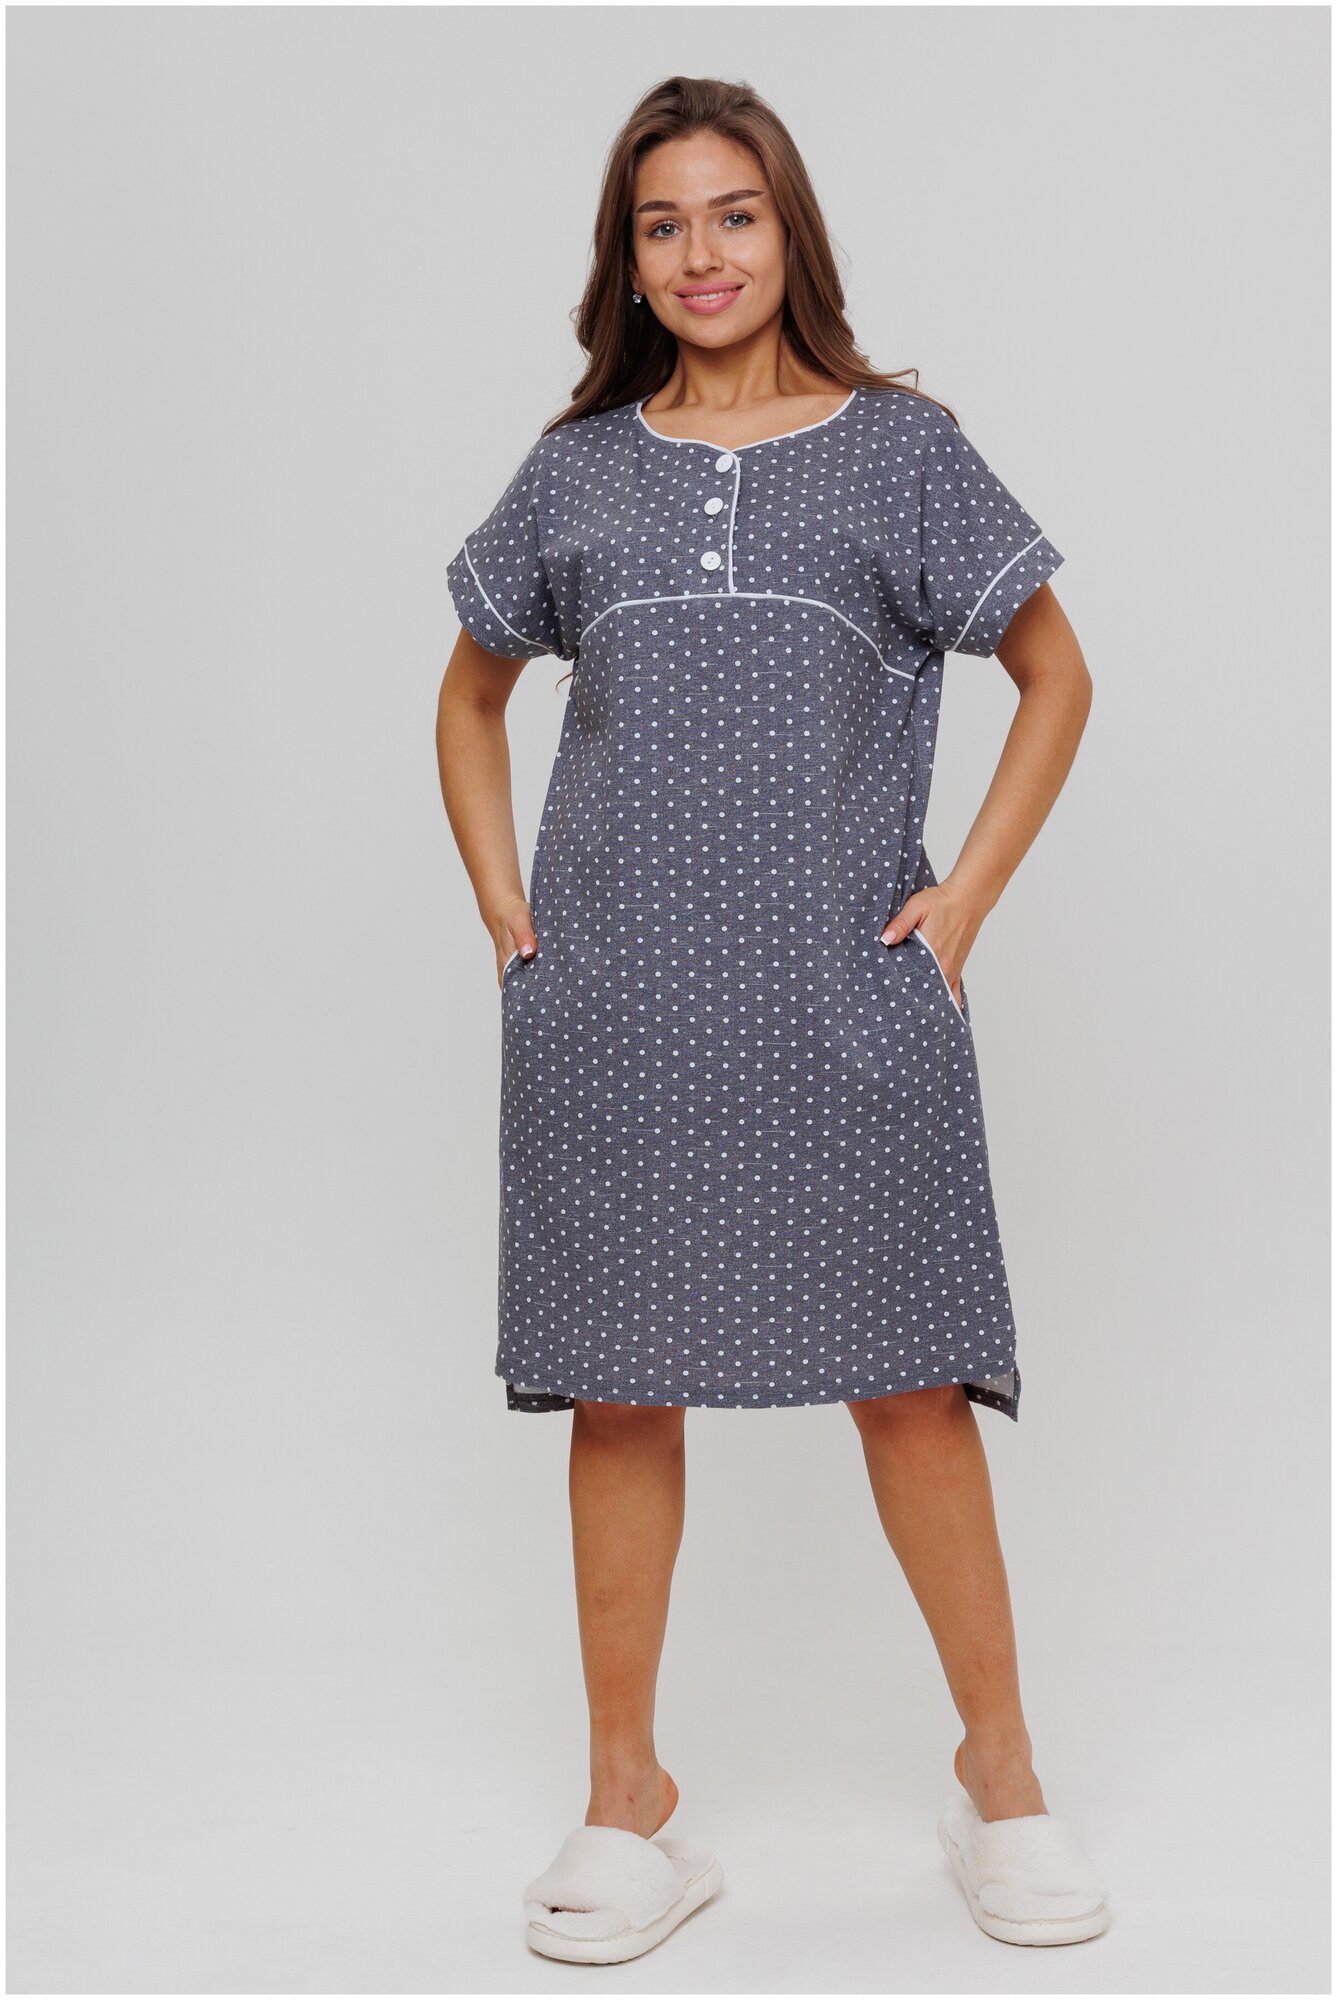 Платье-туника домашнее Modellini 1702/3 серый, 48 размер - фотография № 2